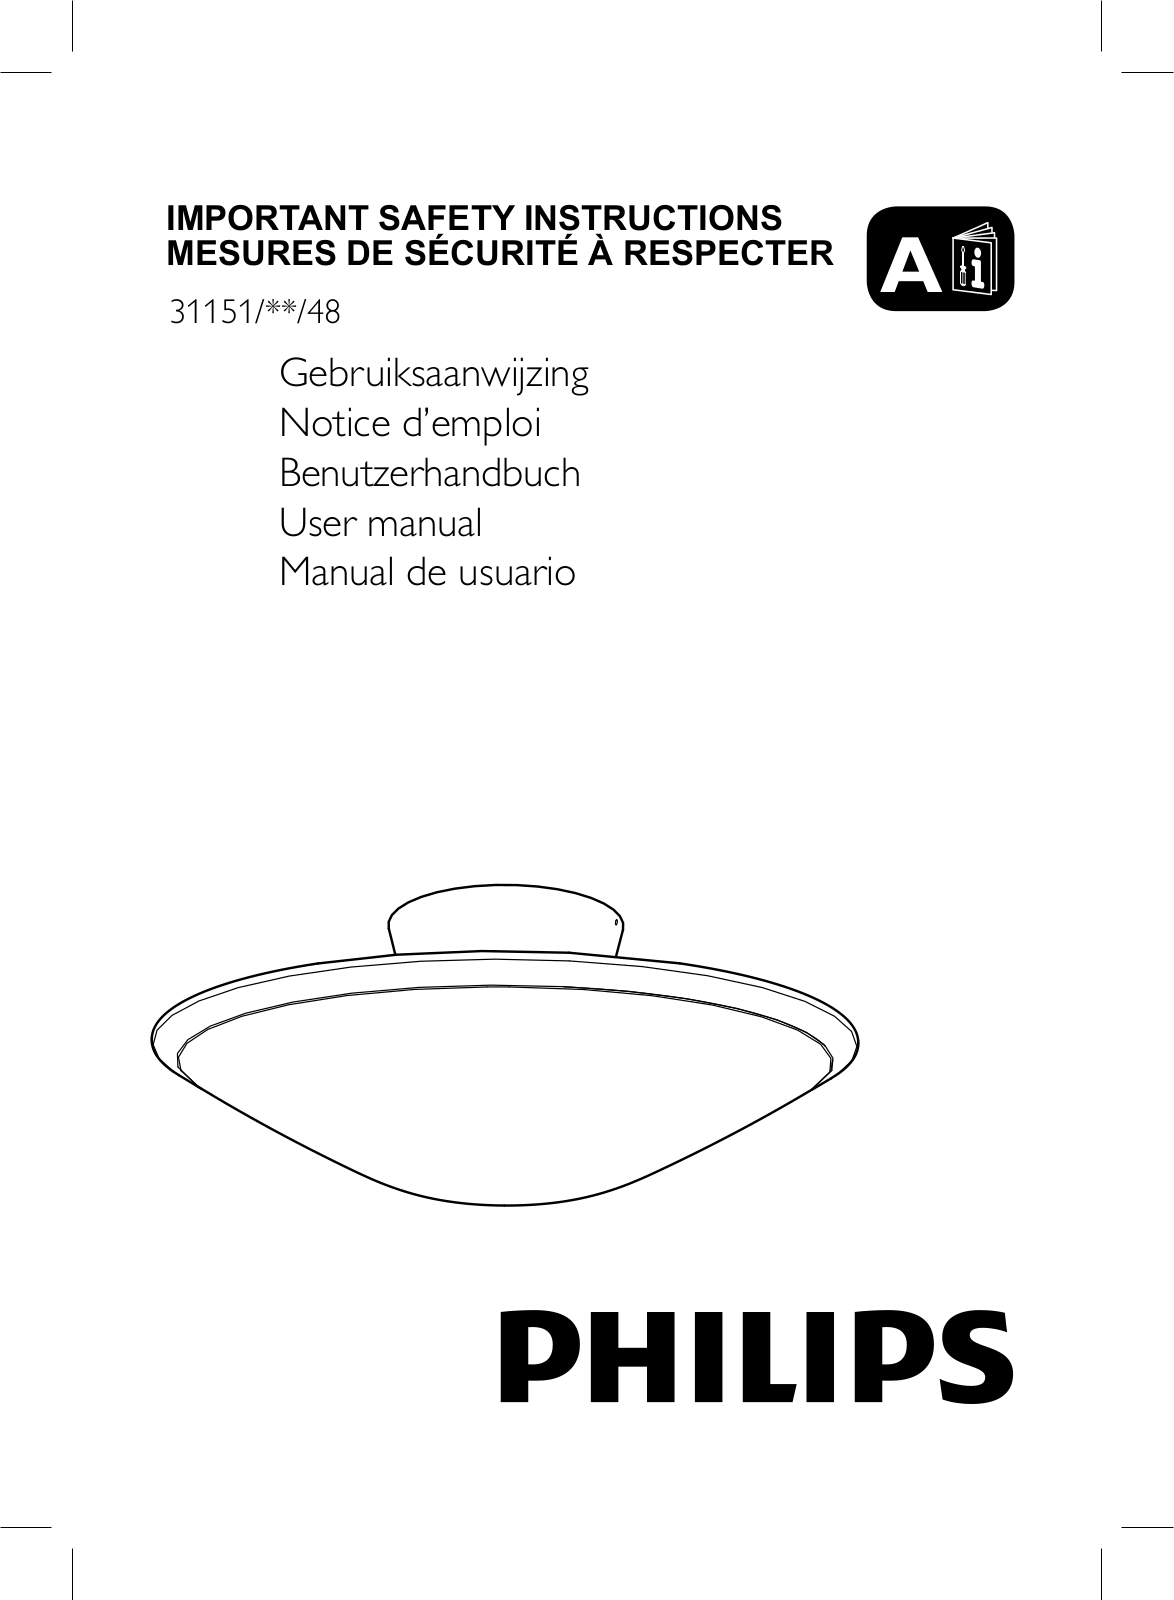 Philips 31151-XX-48 User Manual